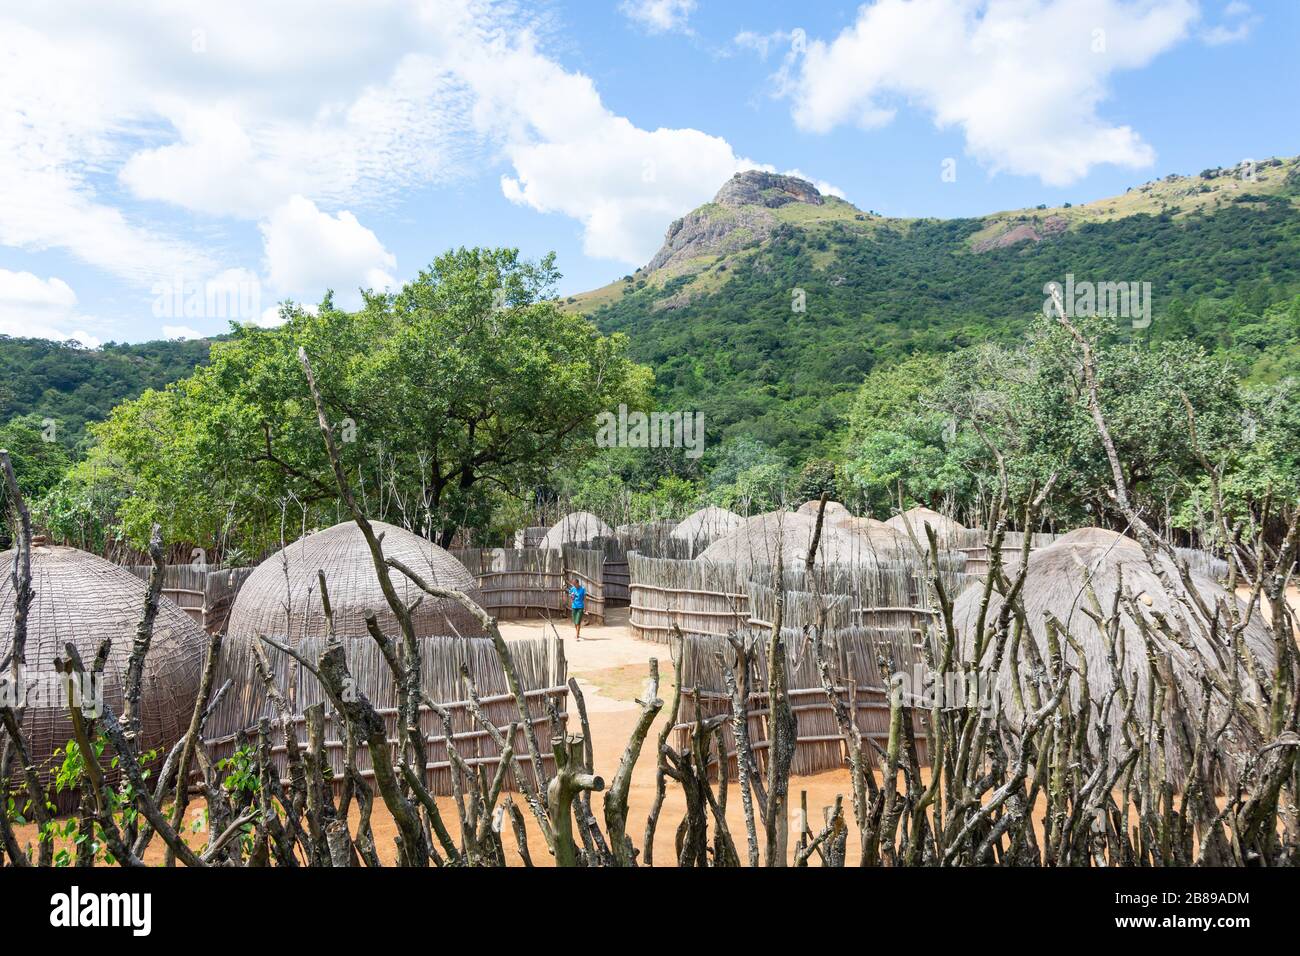 Granjas tradicionales de colmenas en el Centro Cultural Swazi, Reserva Natural de Mantenga, Lobamba, Valle de Ezulwini, Reino de Eswatini (Swazilandia) Foto de stock